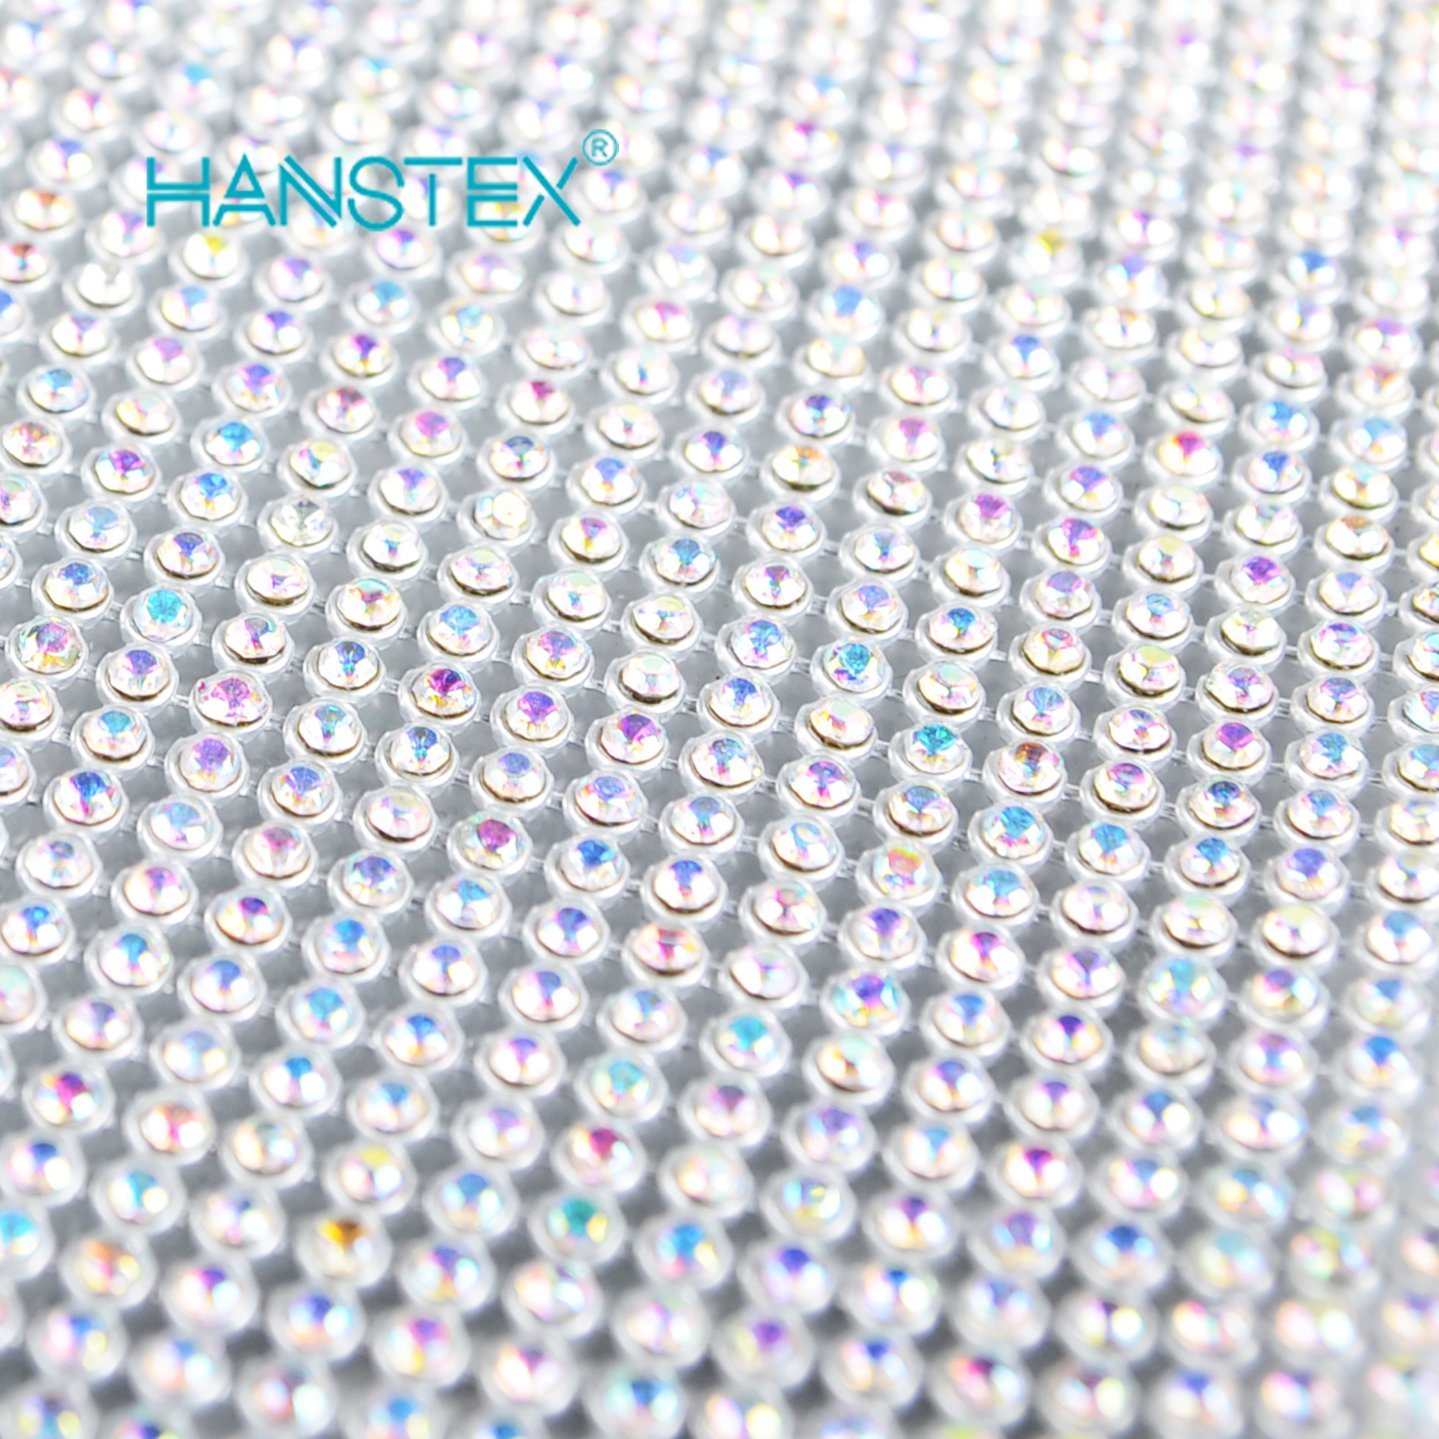 Hans Excellent Quality&#160; Heat Transfer Adhesive Crystal Resin Rhinestone Mesh&#160;